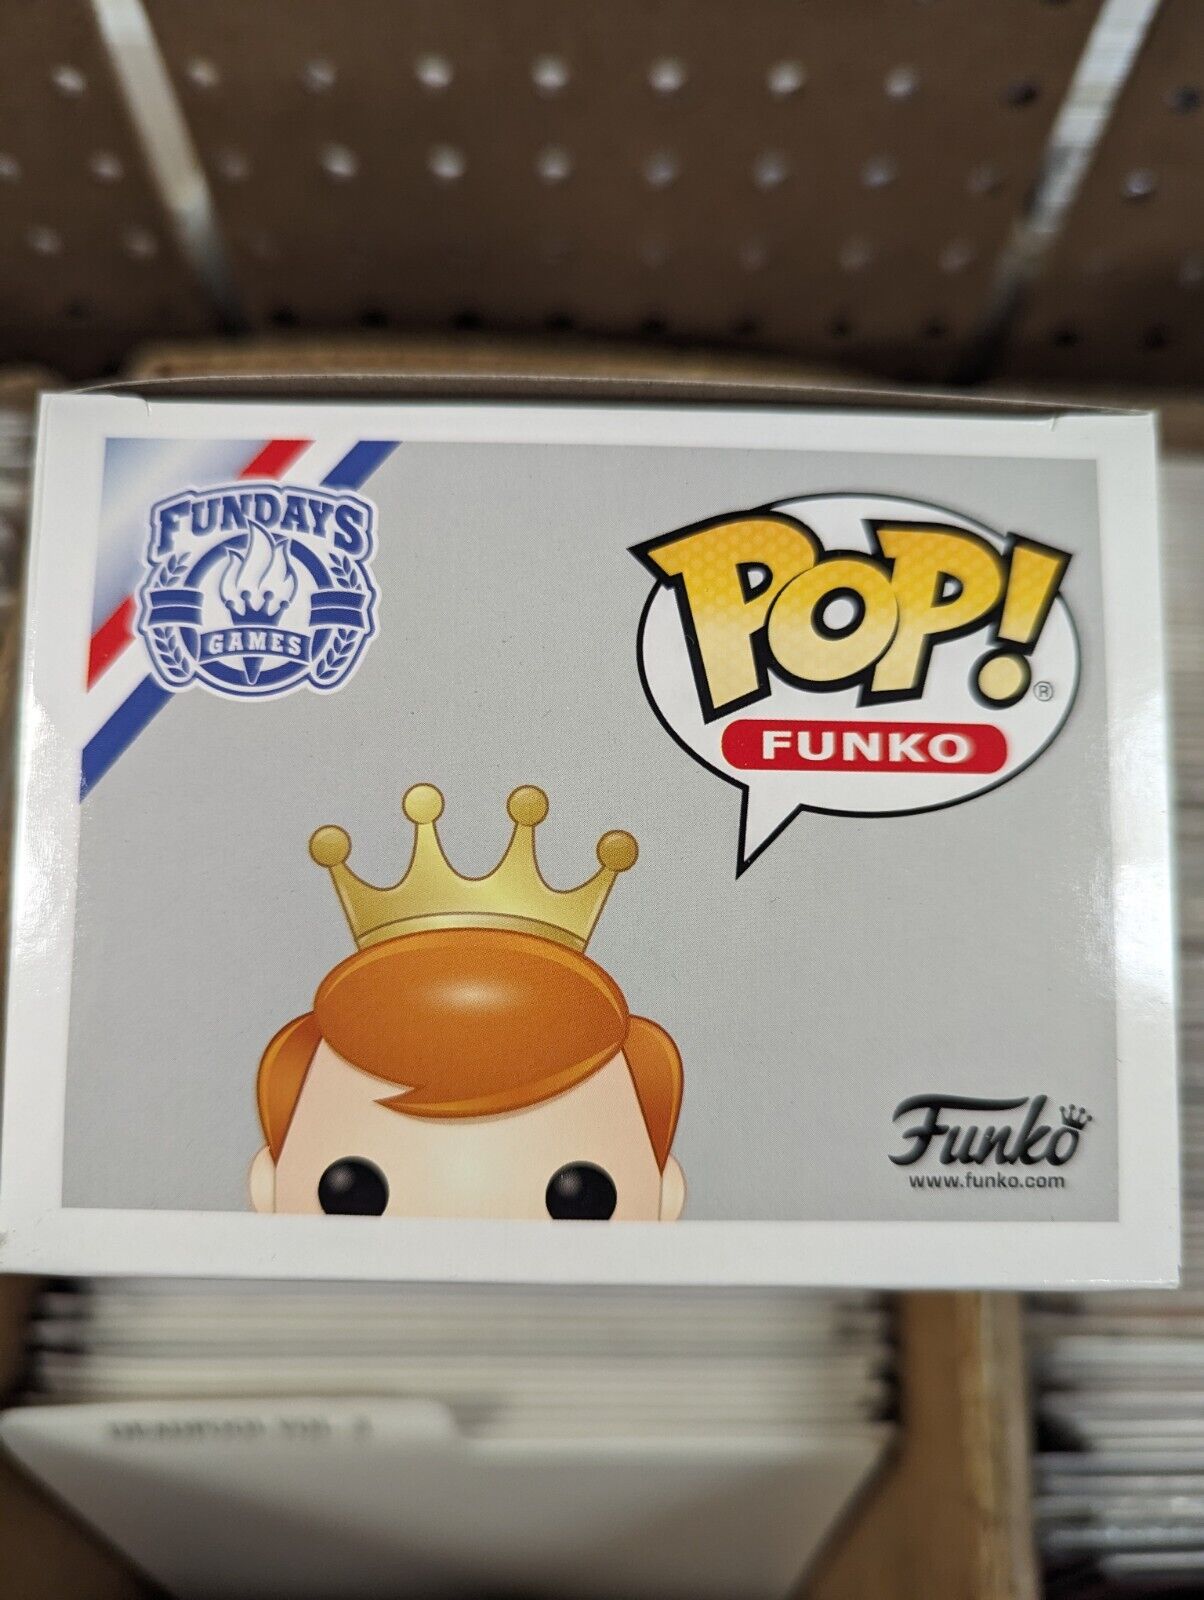 Funko Pop Dream Team Freddy SE Box Of Fun 5000 Pcs